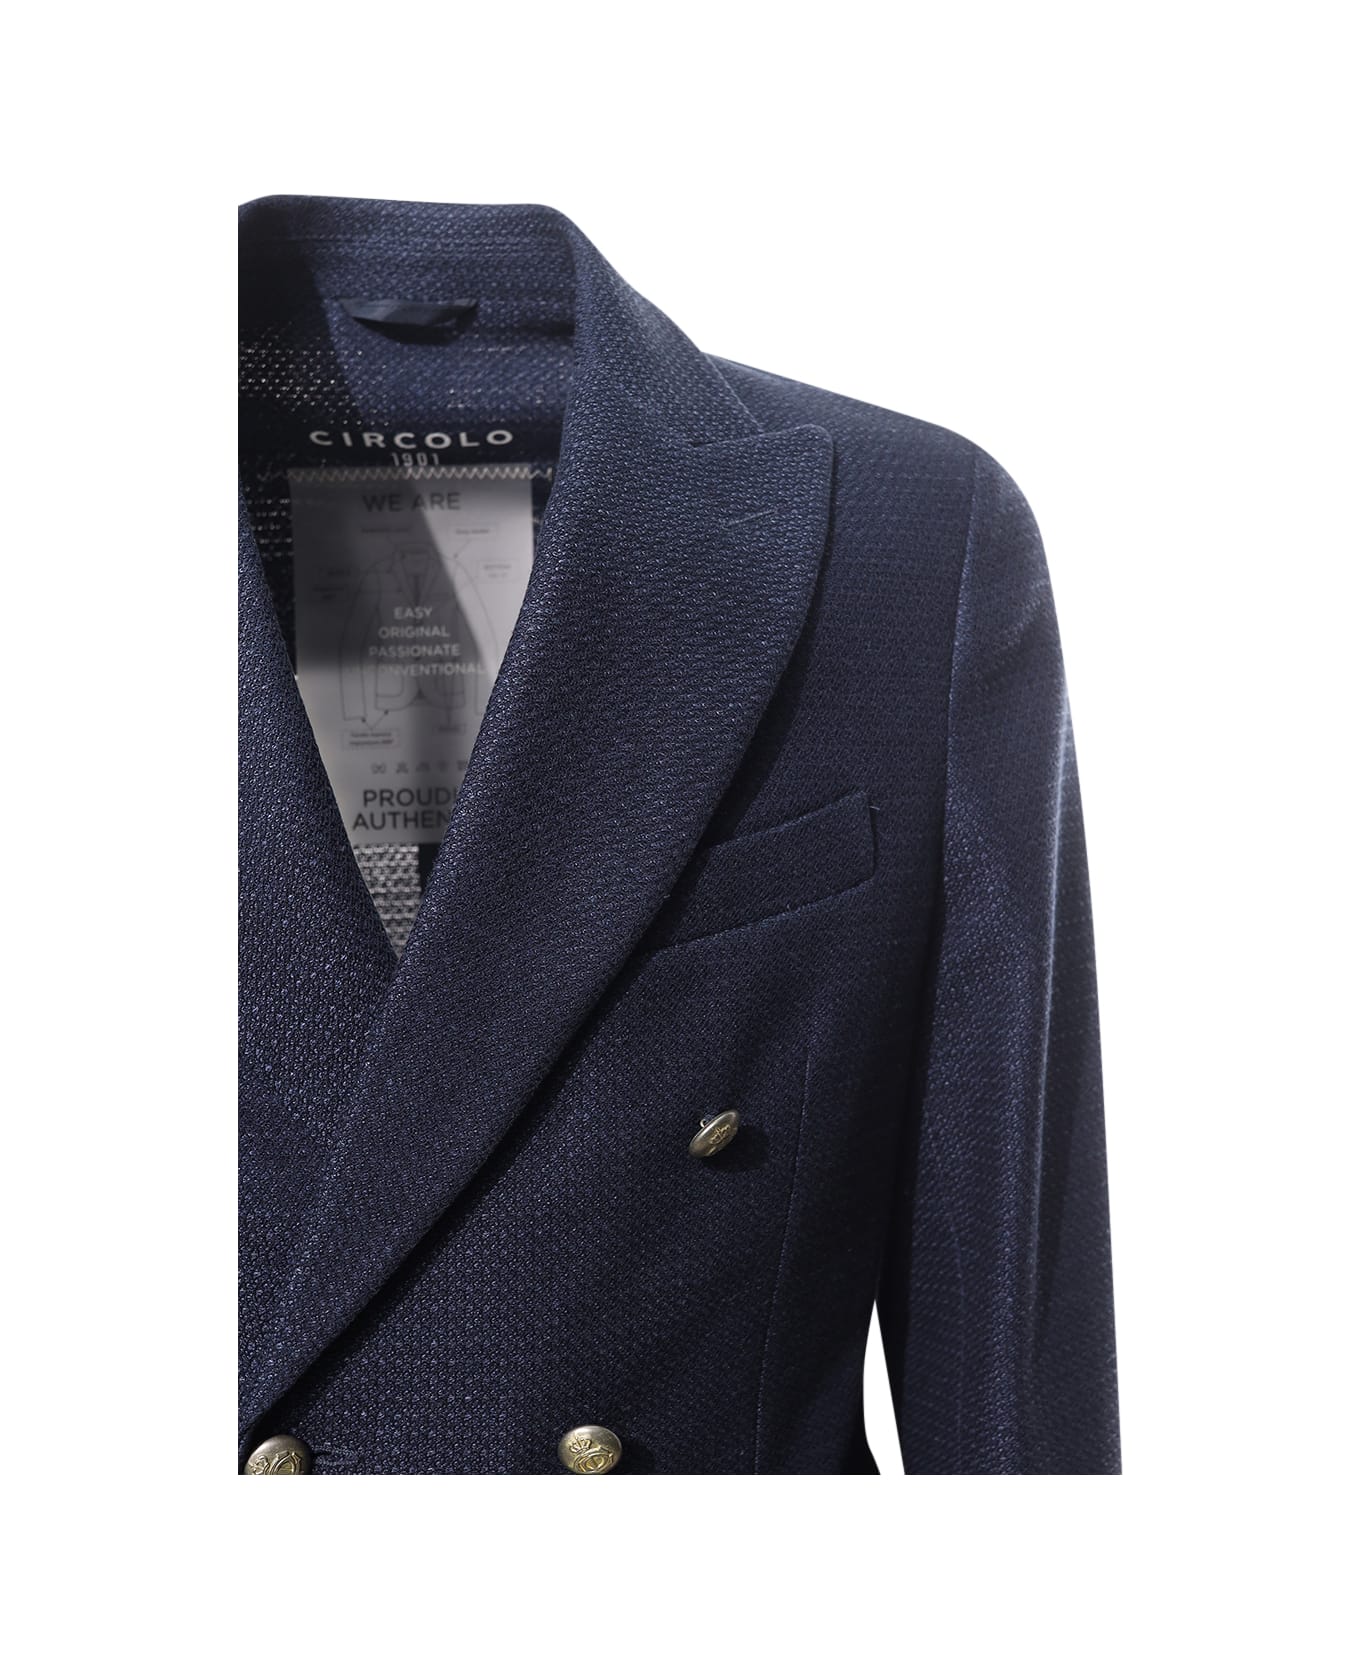 Circolo 1901 Double-breasted Jacket Circolo - BLUE